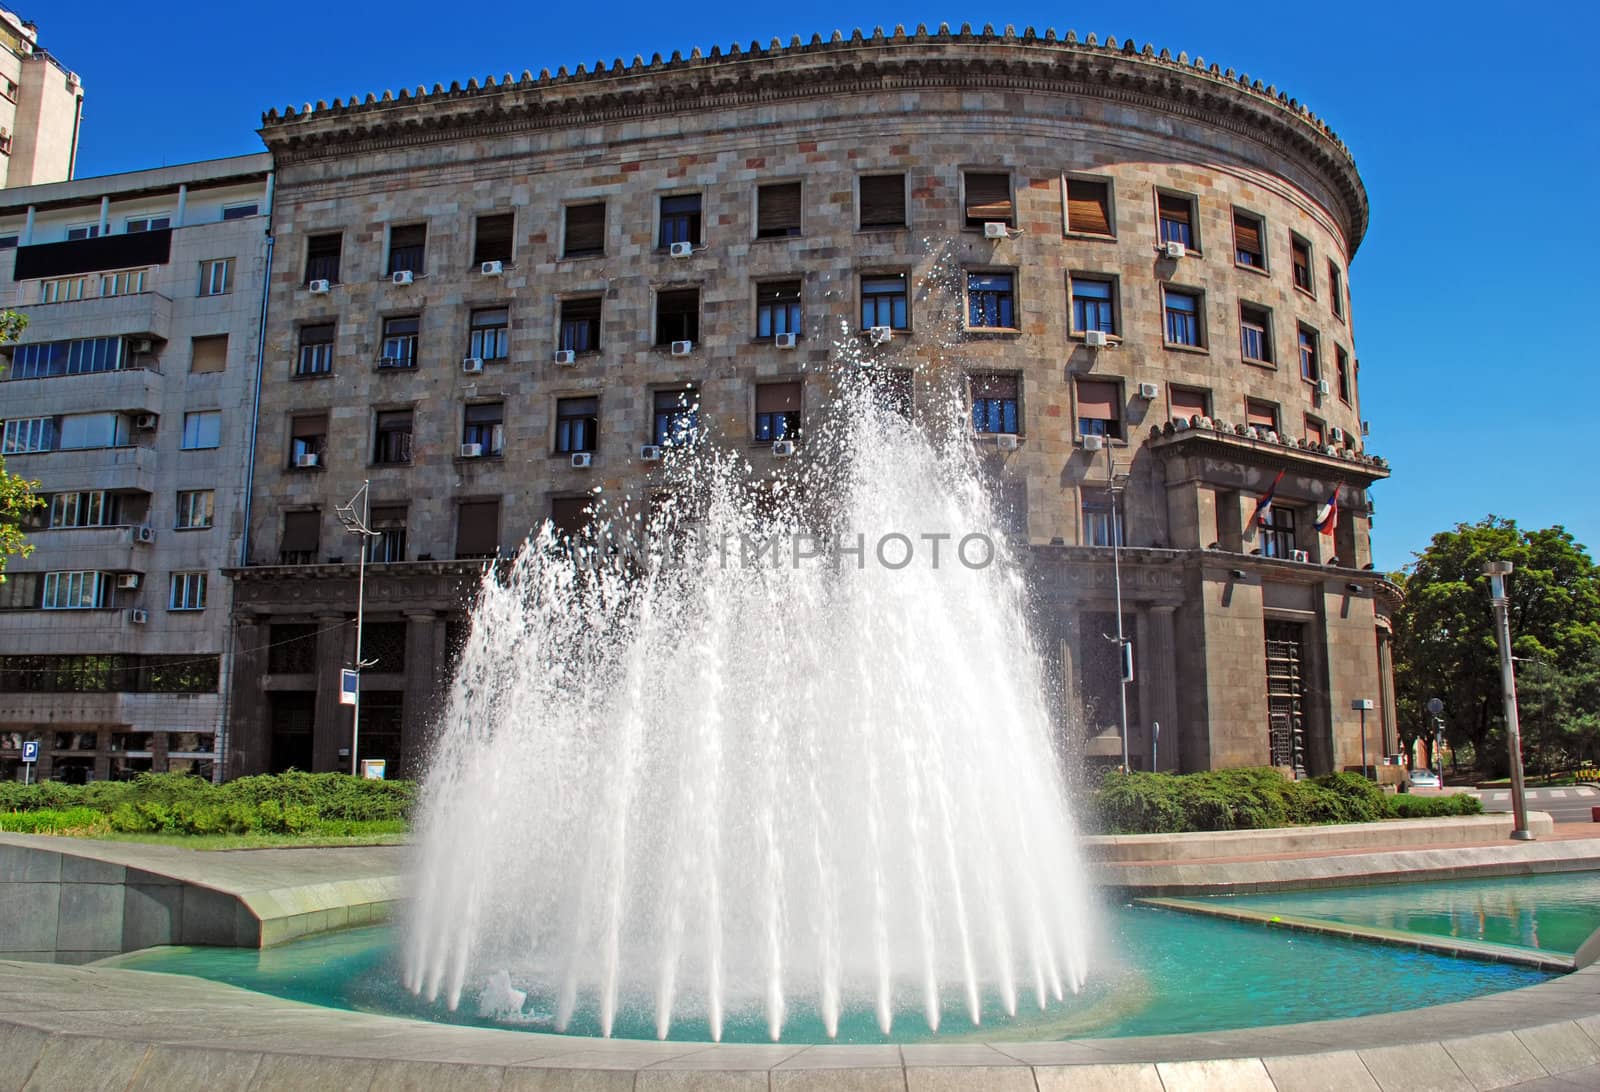 fountain and architecture background in center of Belgrade, Serbia